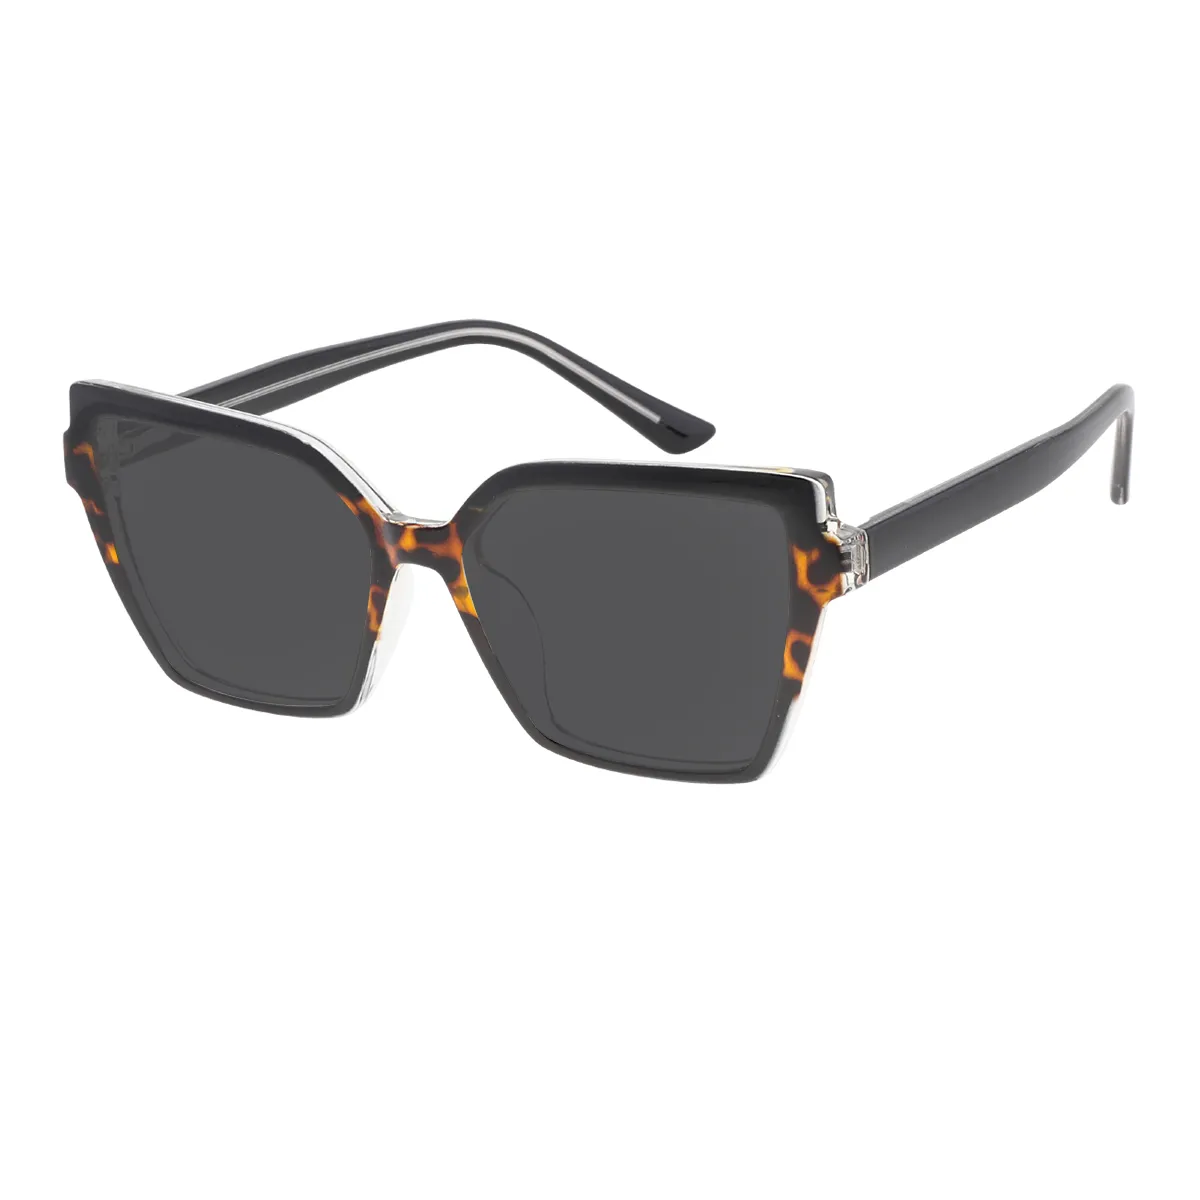 Vesta - Square Black Sunglasses for Women